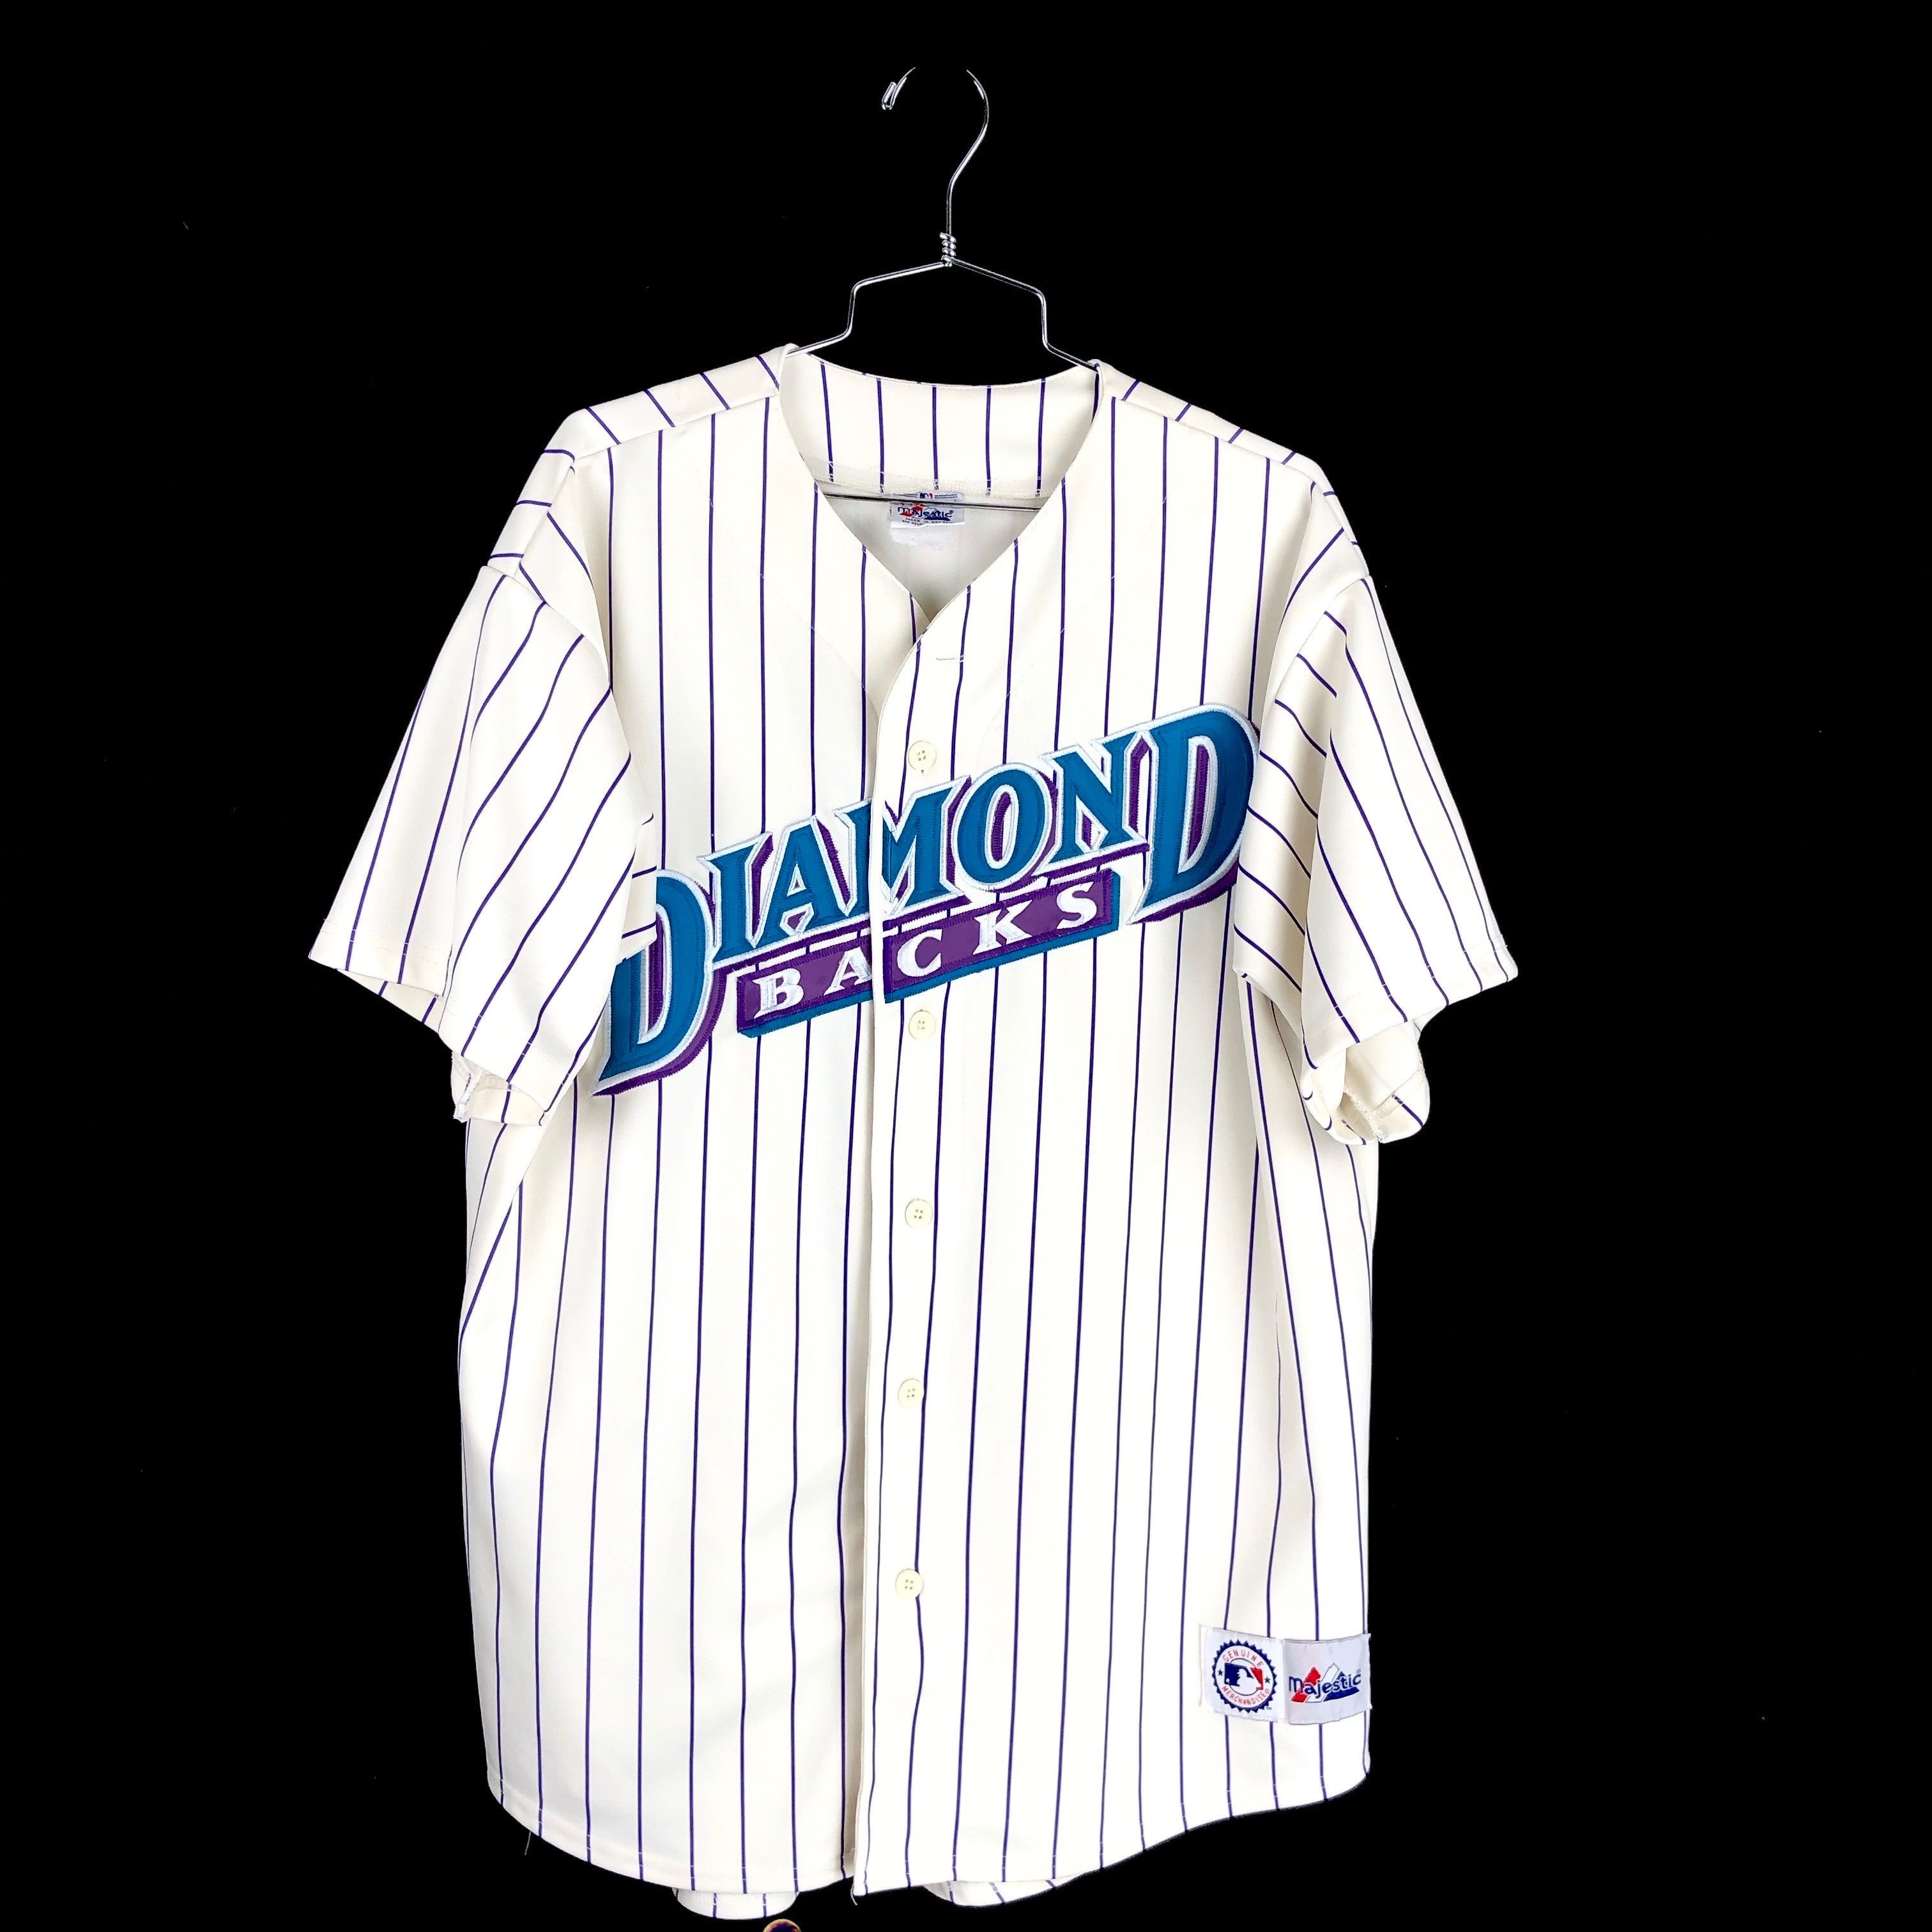 90s Arizona Diamondbacks Pinstripe MLB t-shirt Medium - The Captains Vintage